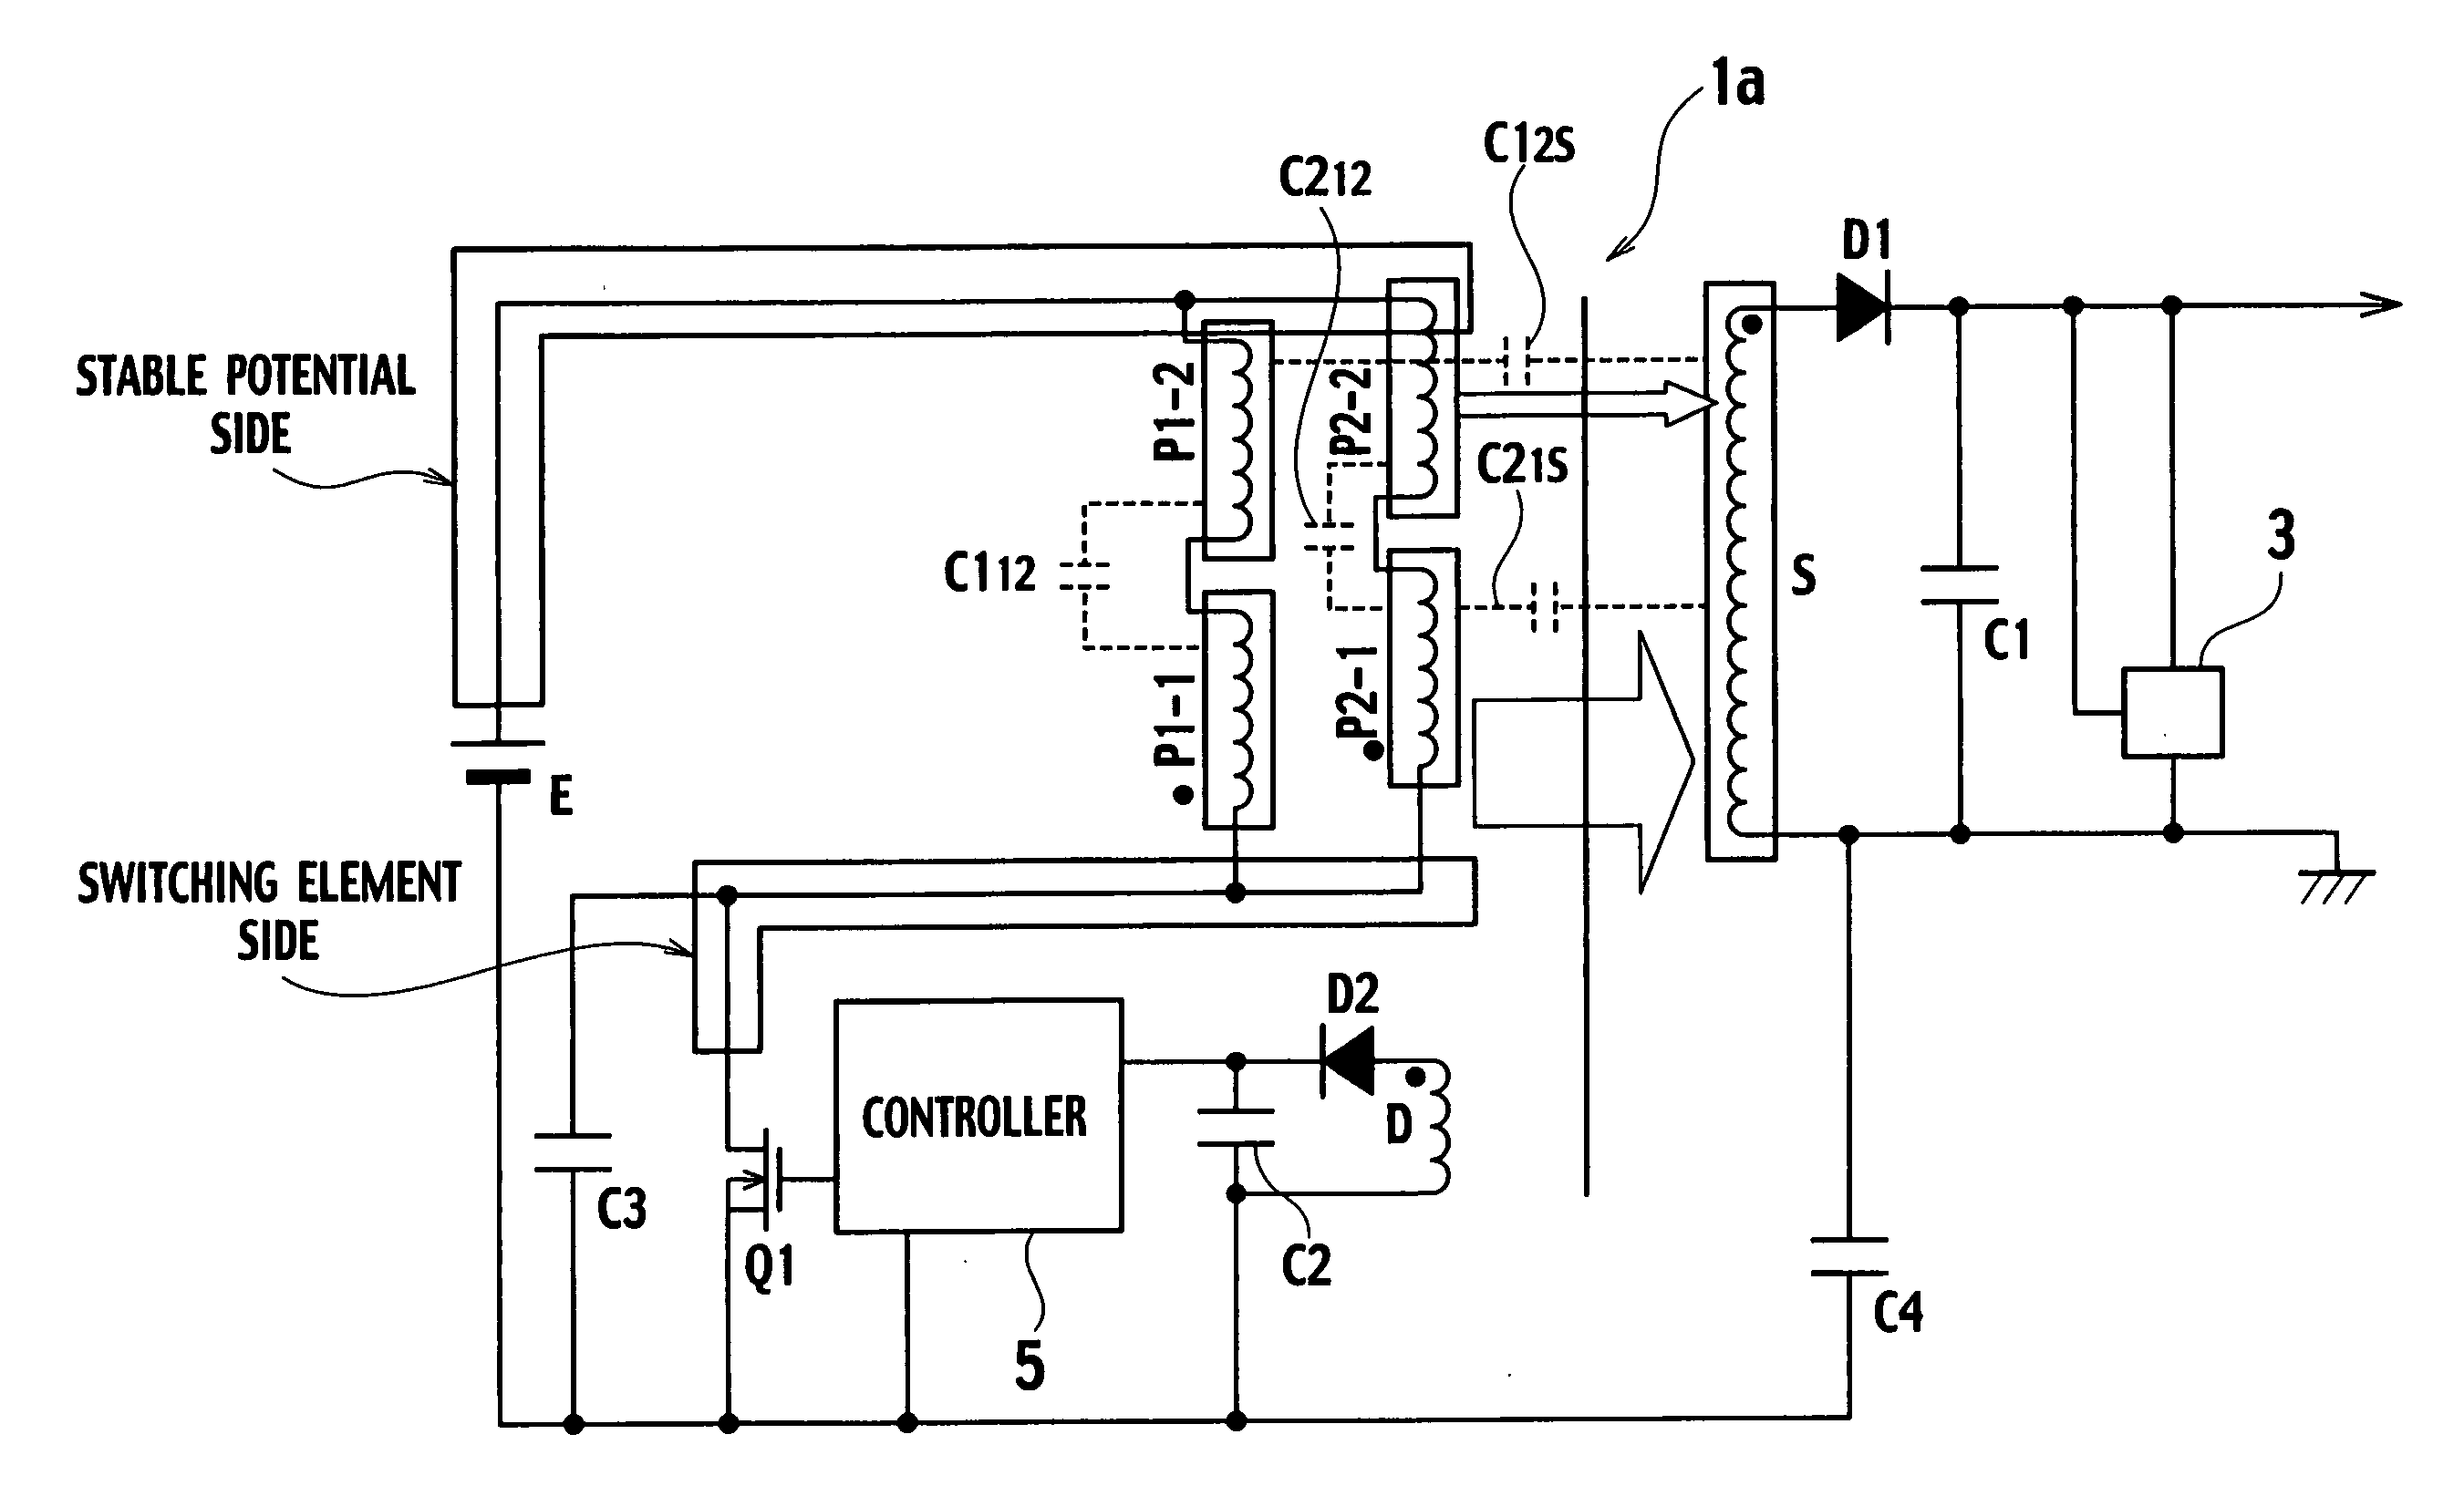 DC power source apparatus